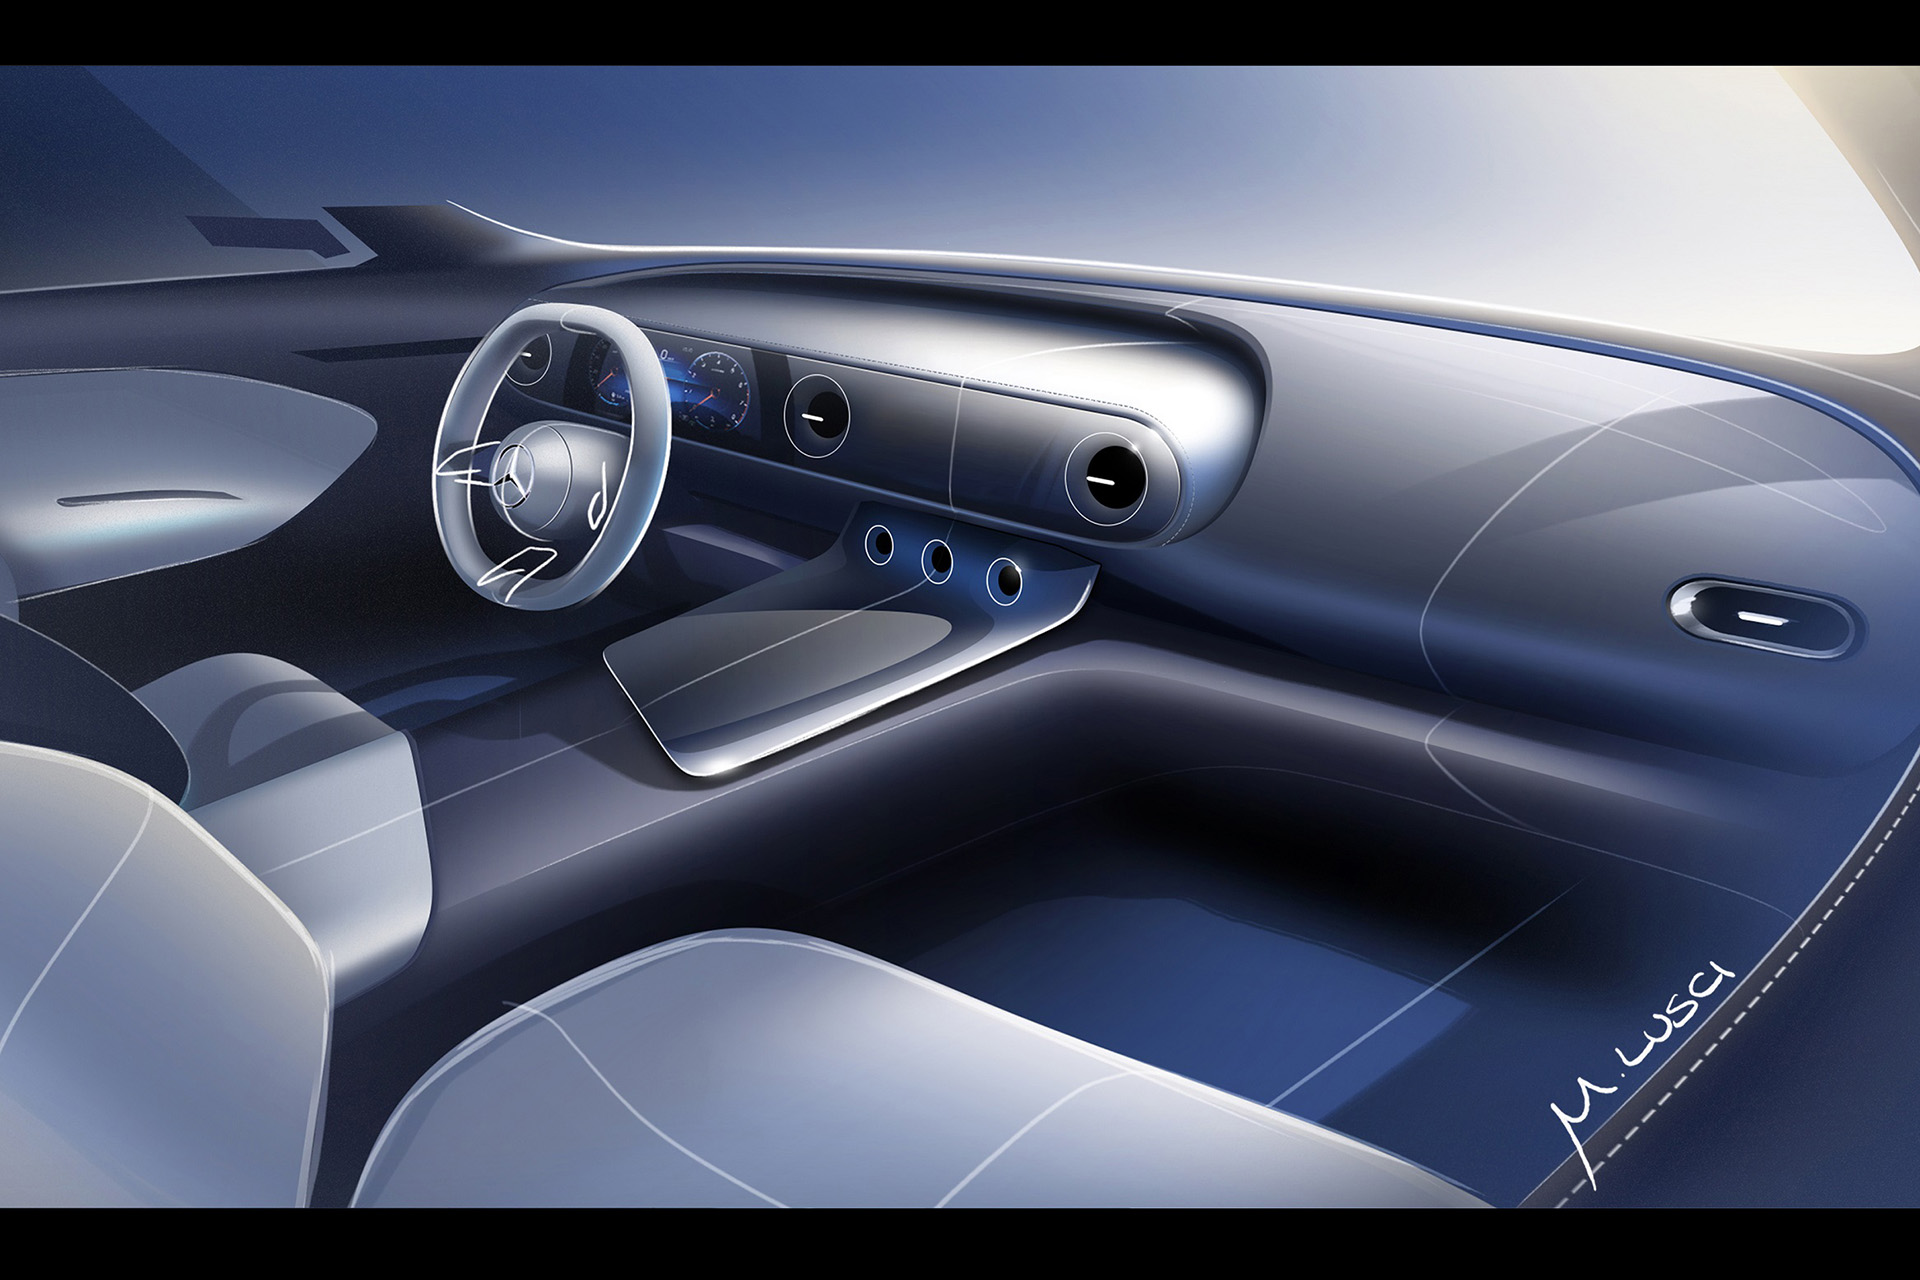 2022 Mercedes-Benz Citan Design Sketch Wallpapers #110 of 115